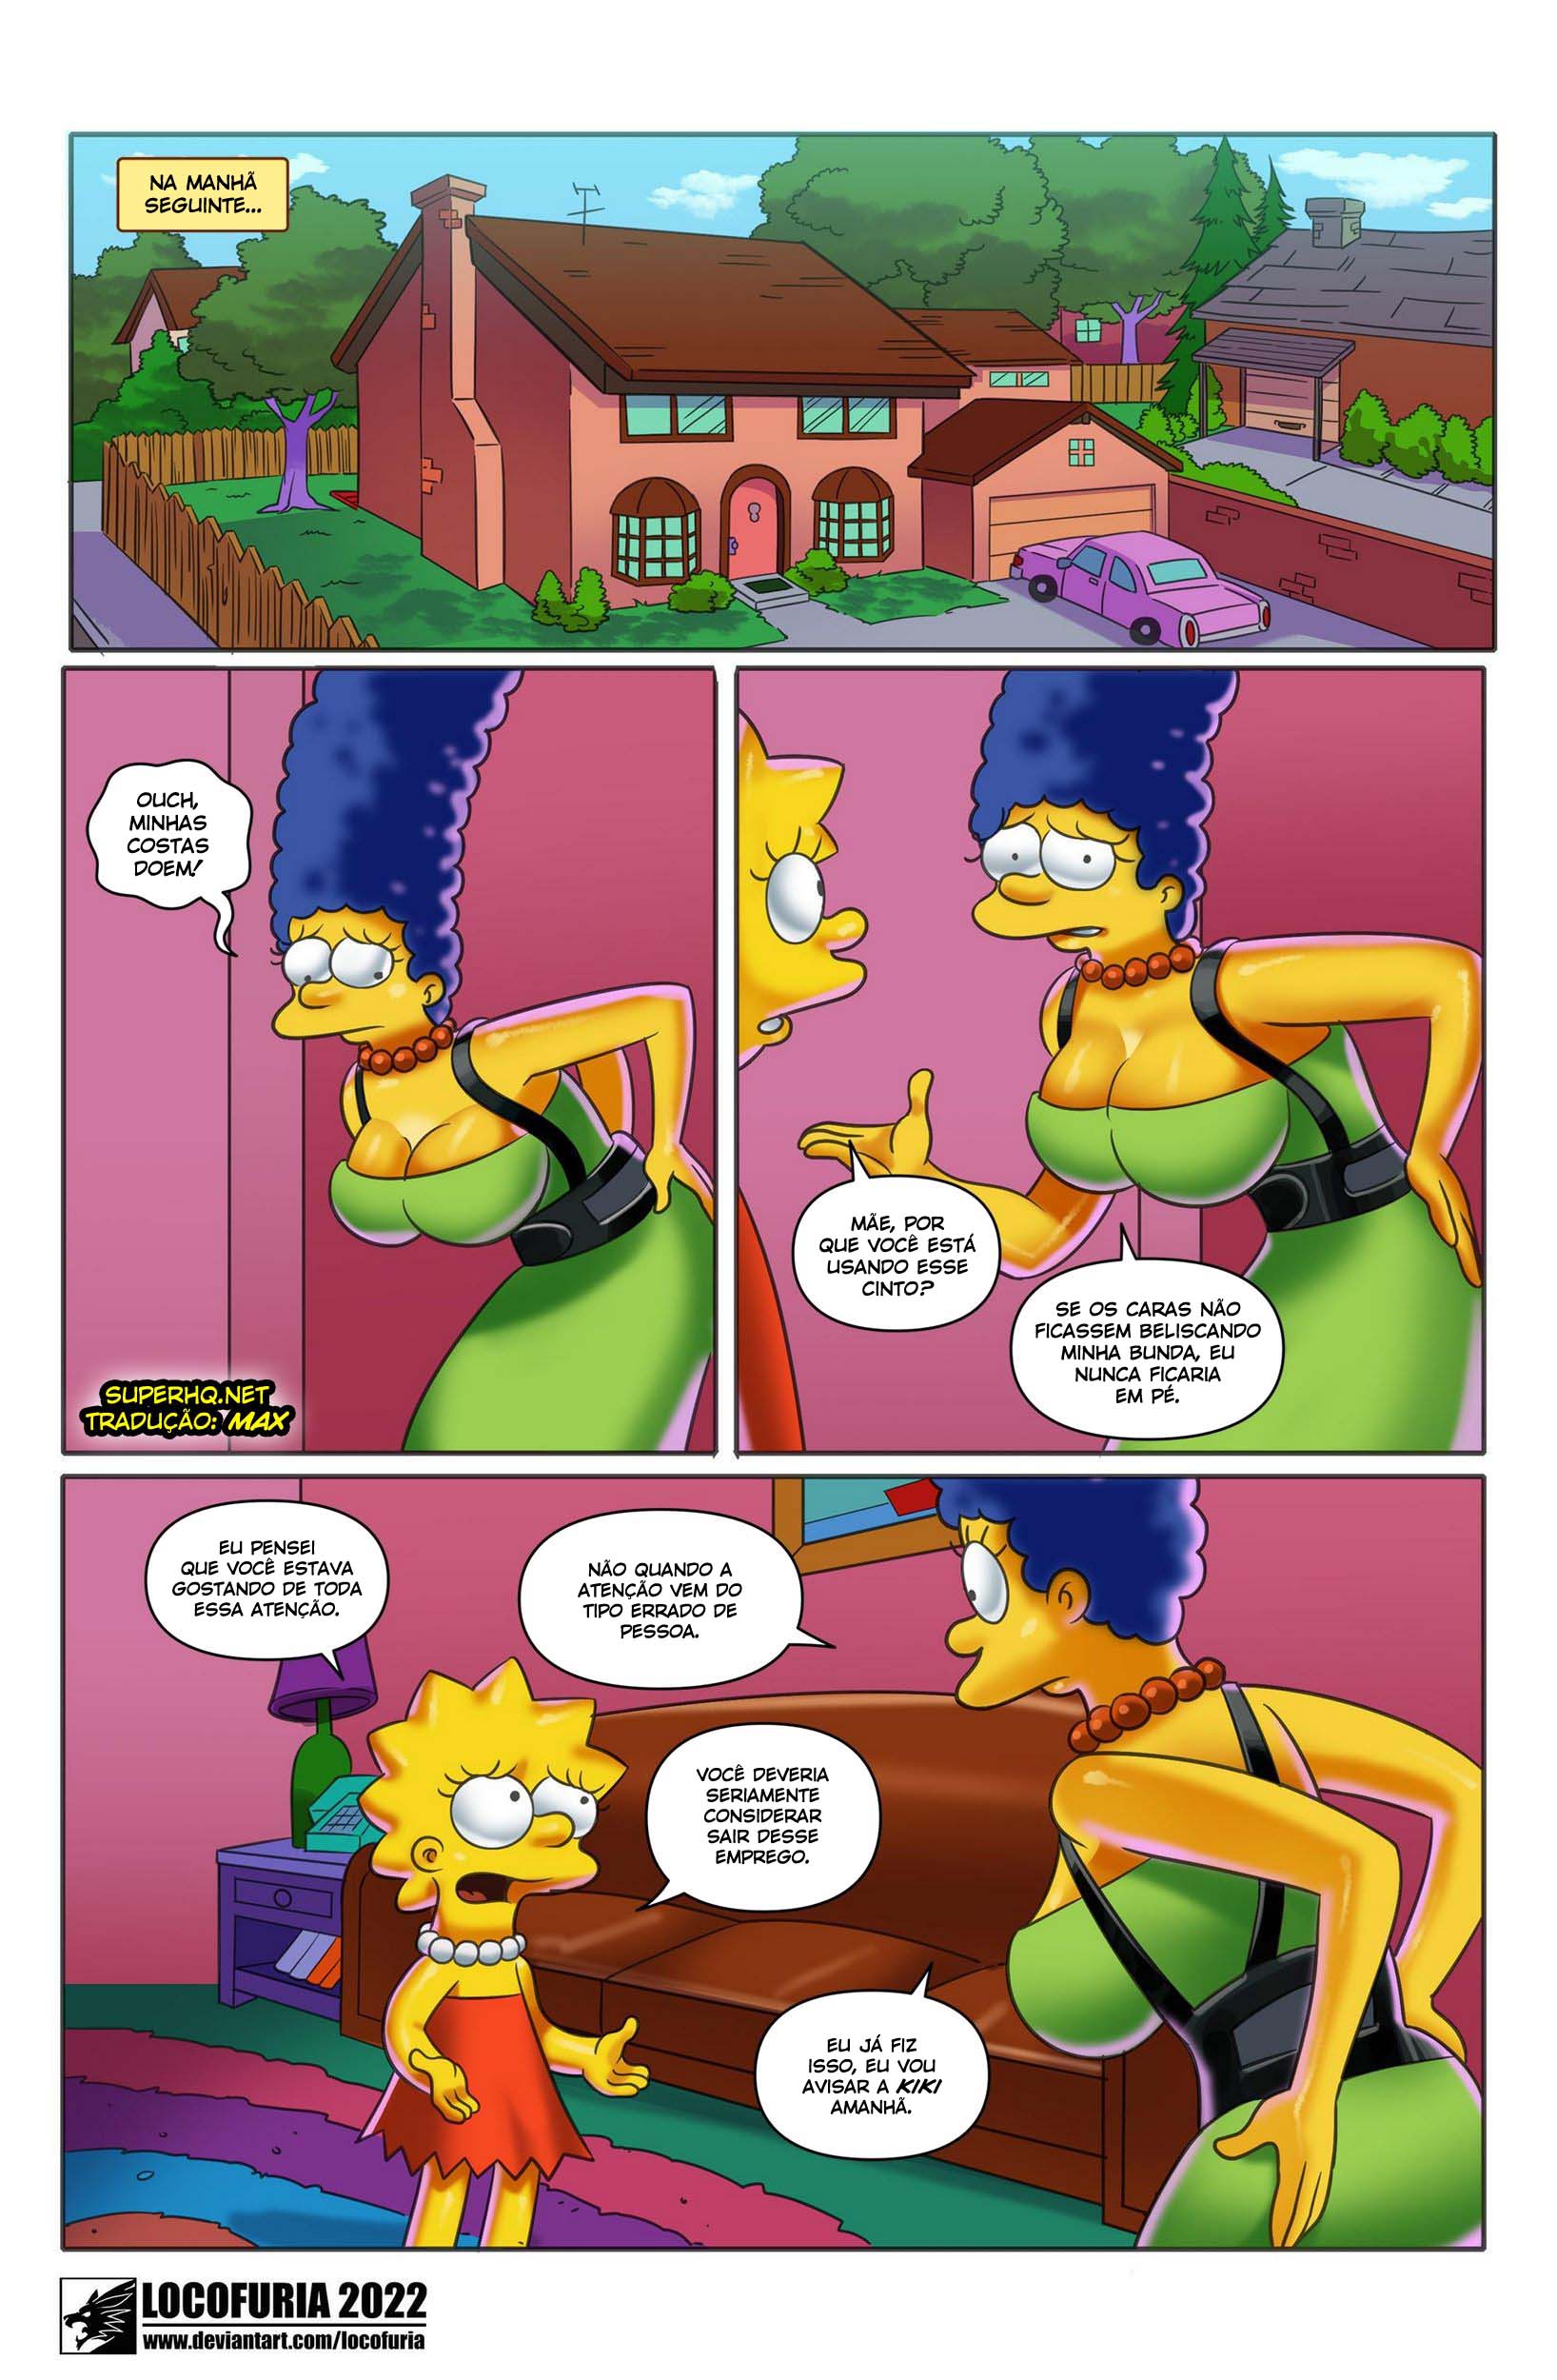 XXX H Q - Os enormes peitos de Marge Simpson